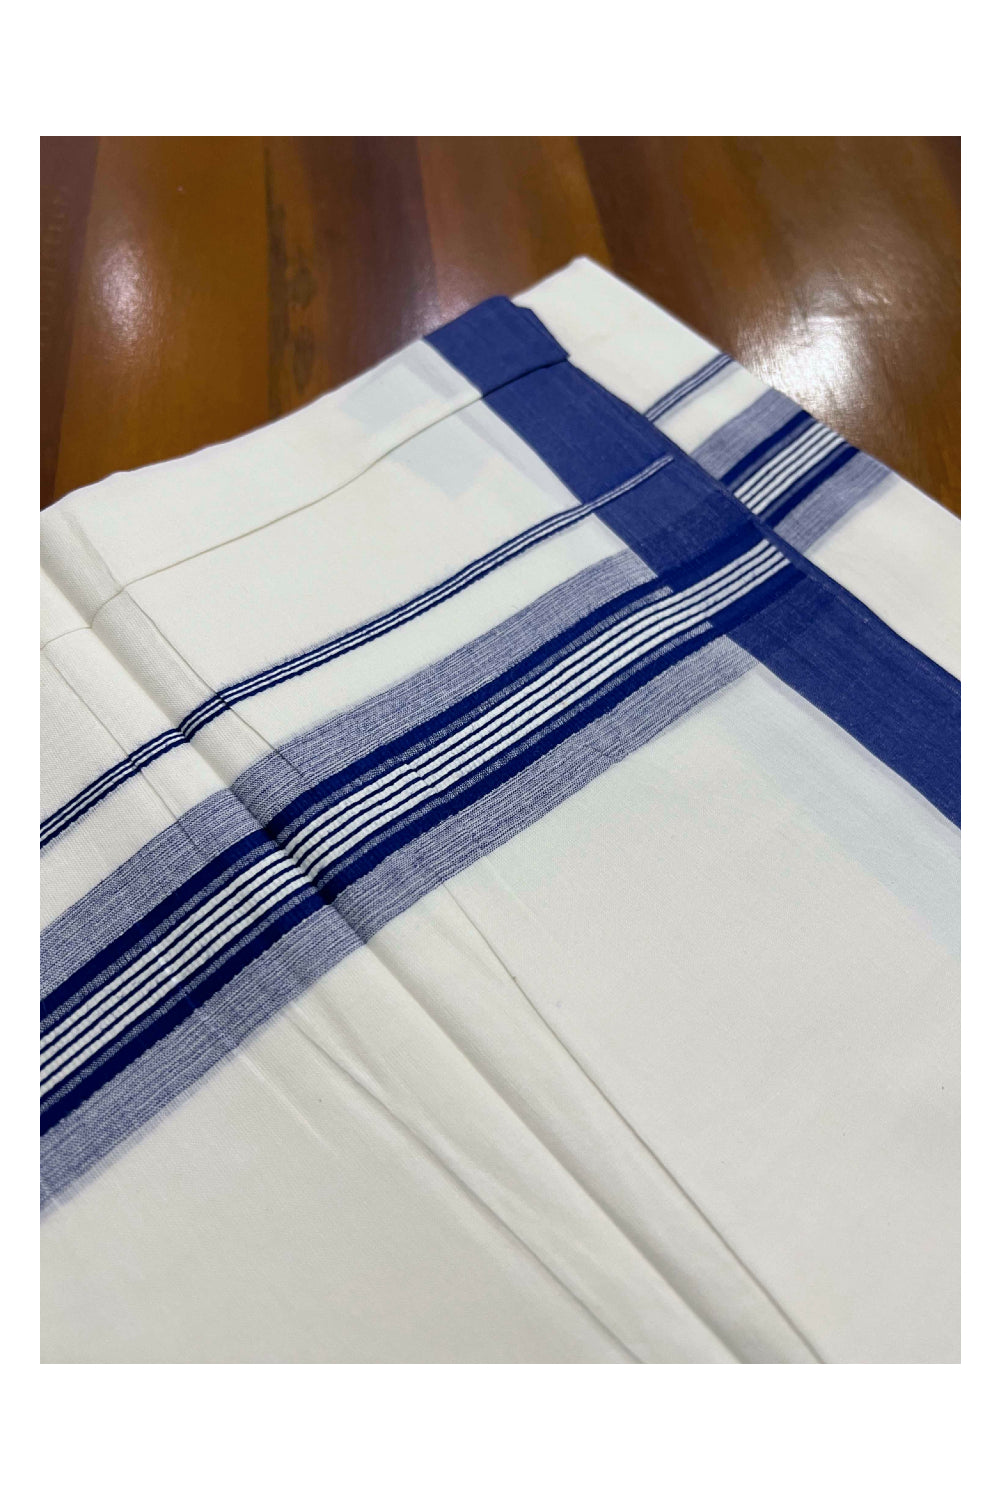 Pure White Cotton Mundu with Dark Blue and White Line Kara (South Indian Dhoti)